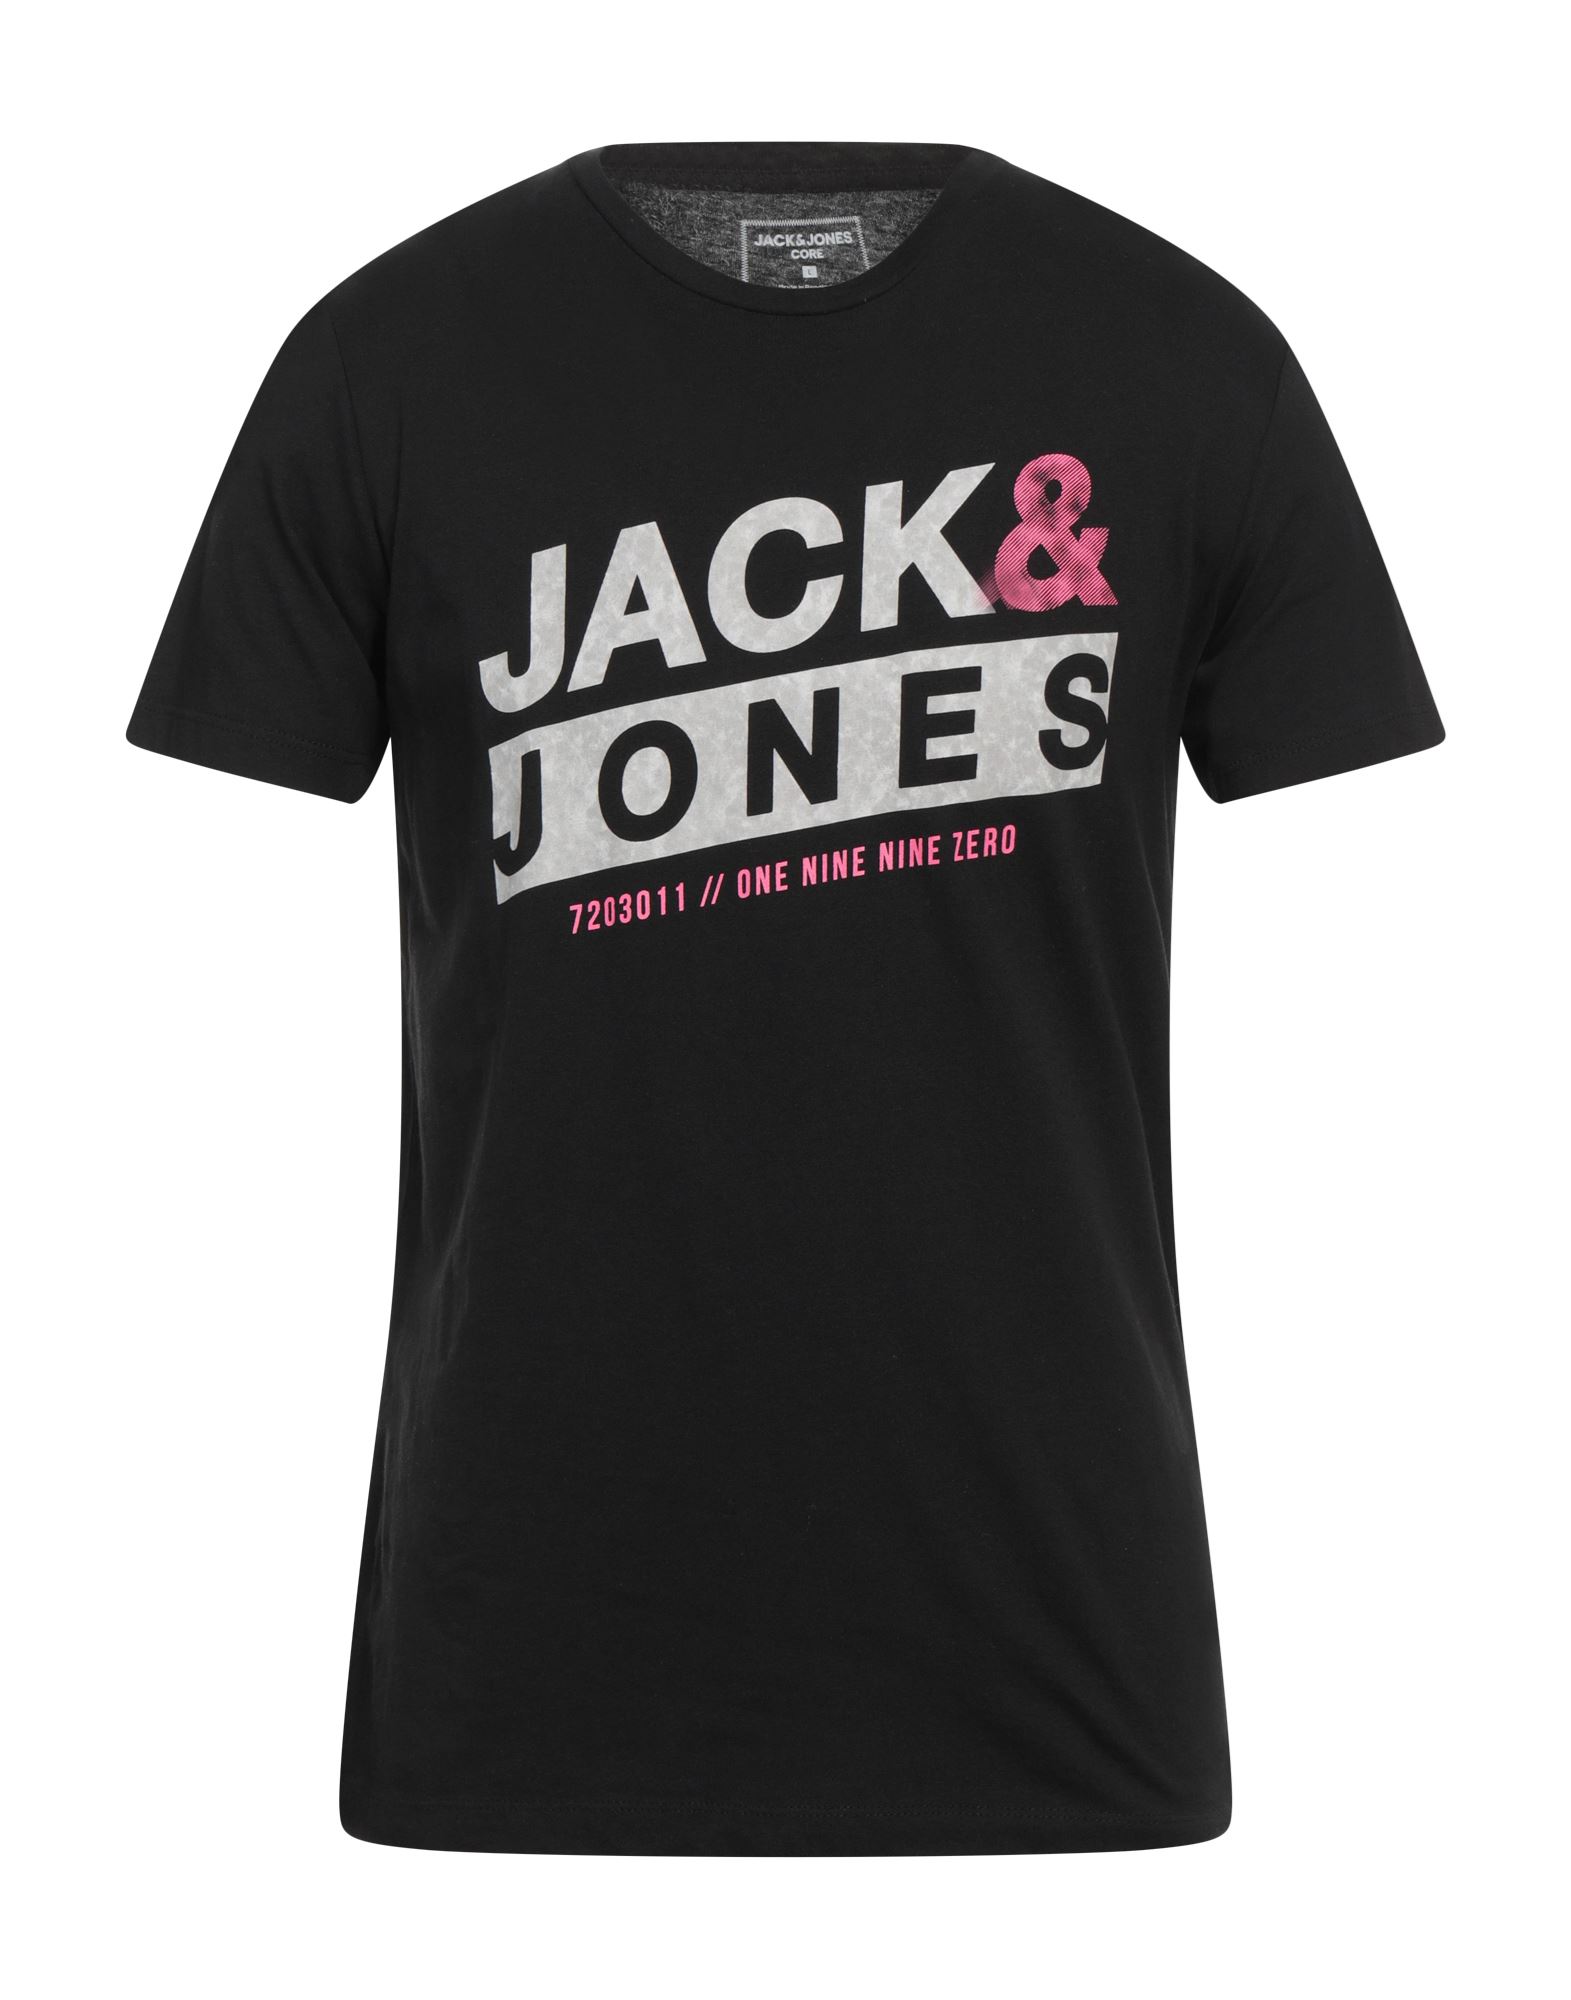 Jack & Jones Man T-shirt Black Size L Cotton